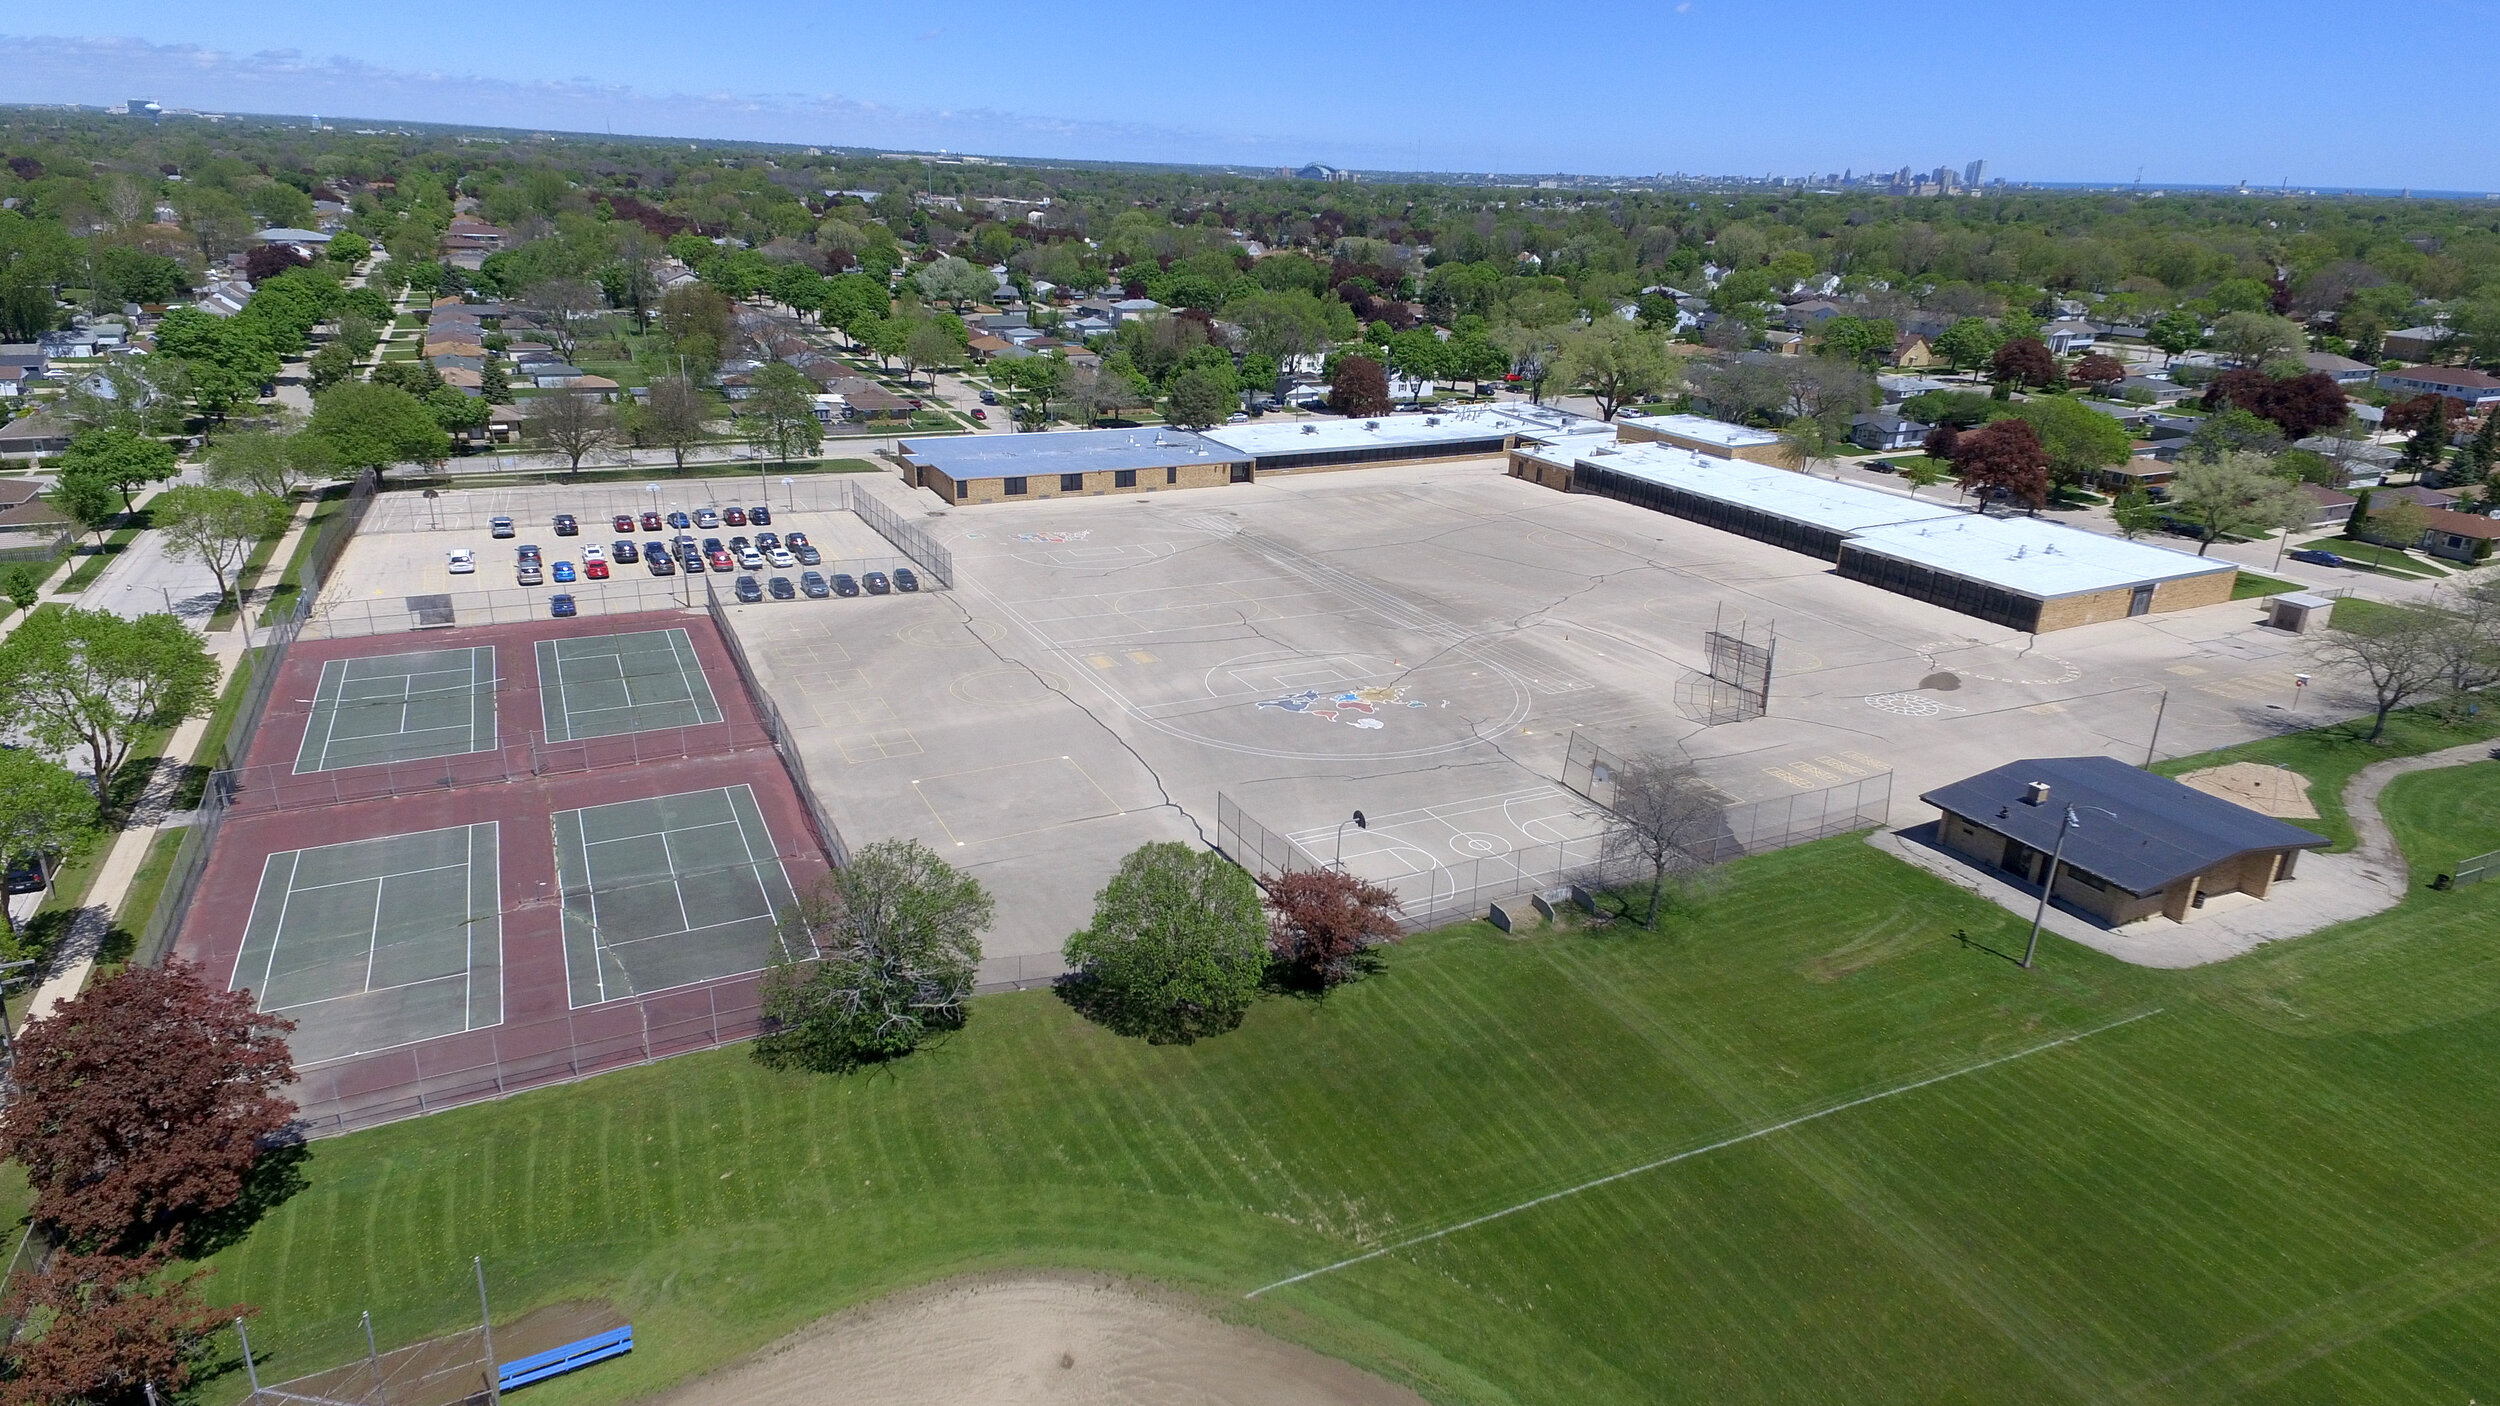 Schoolyard Aerial View in 2018